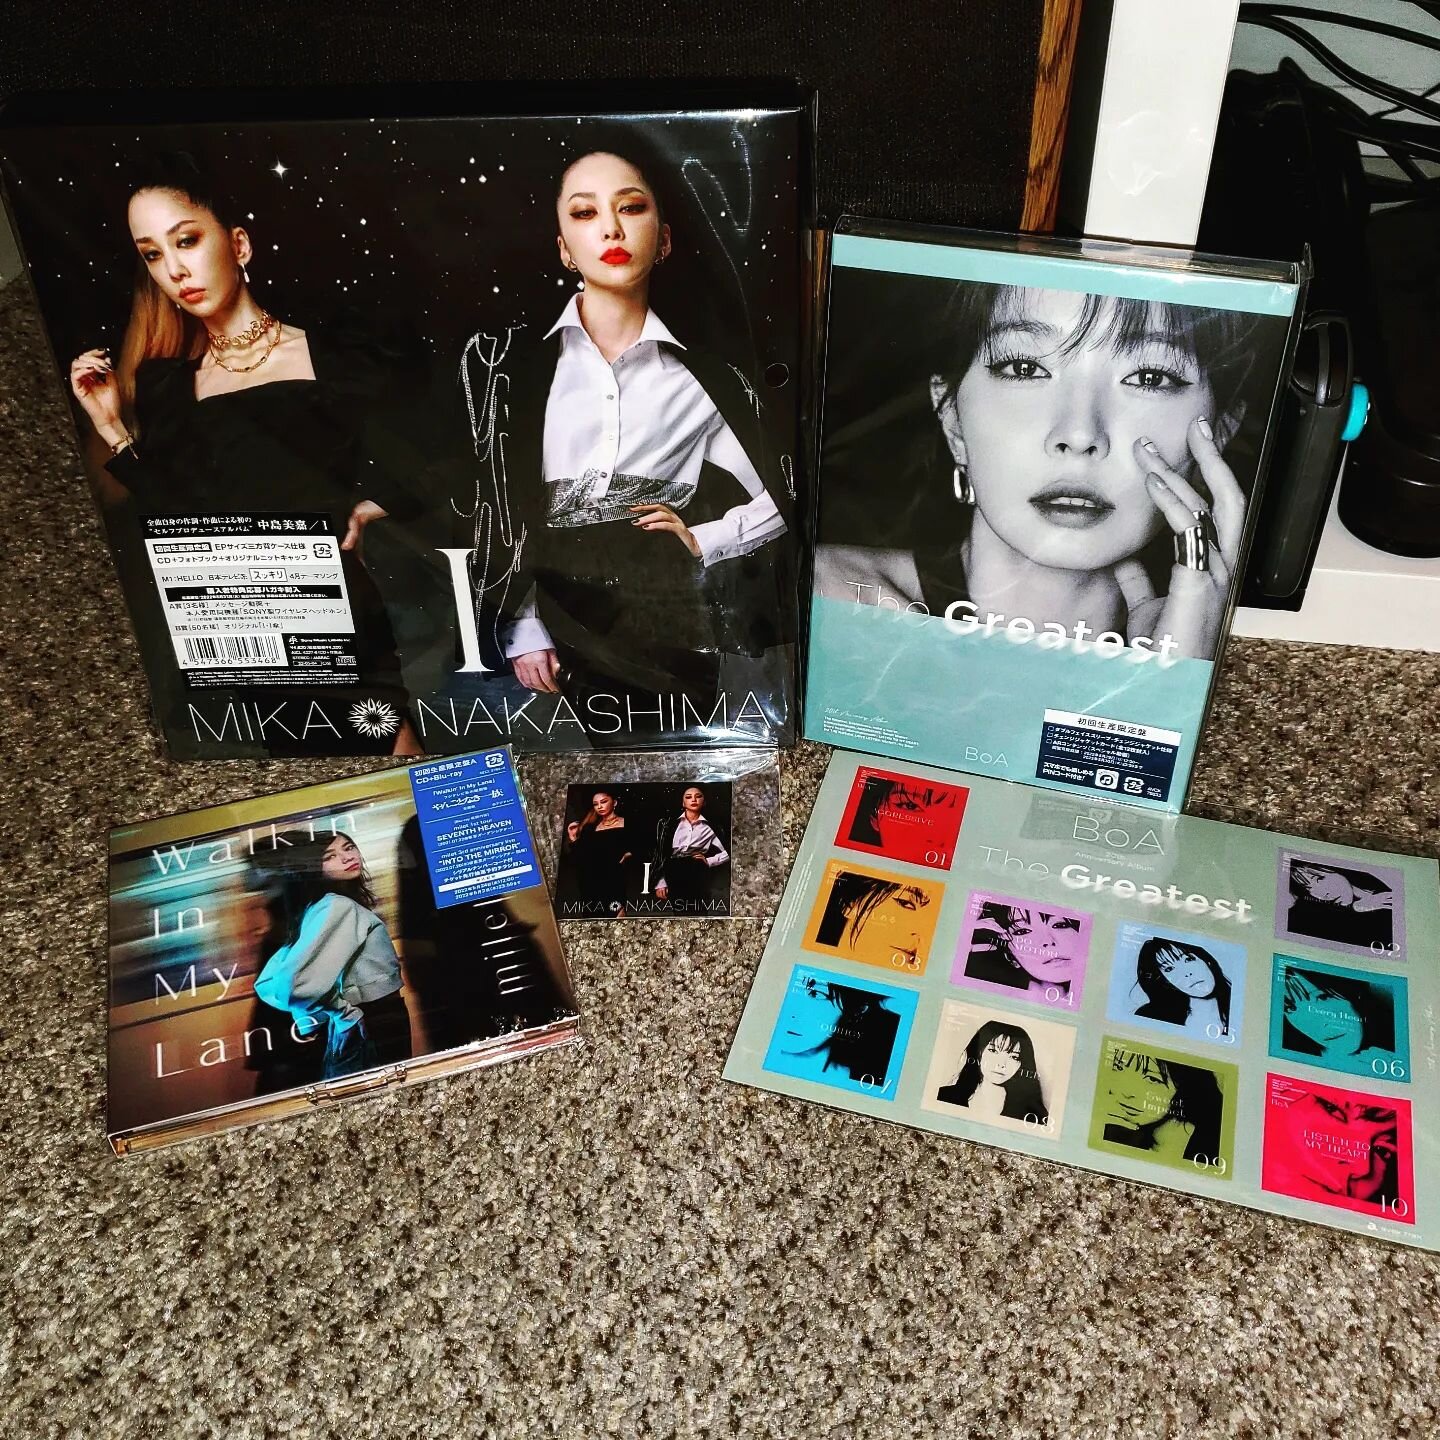 Luna's @cdjapan haul from end of May!! Beautiful releases!! Looking forward to more Jpop CDs down the pipeline. #NakashimaMika #BoA #milet #中島美嘉 #BoATheGreatest #BoAKwon #newreleases #Jpop #Japanesemusic #Japaneseartist #mailday #whatsonyourdoorstep 